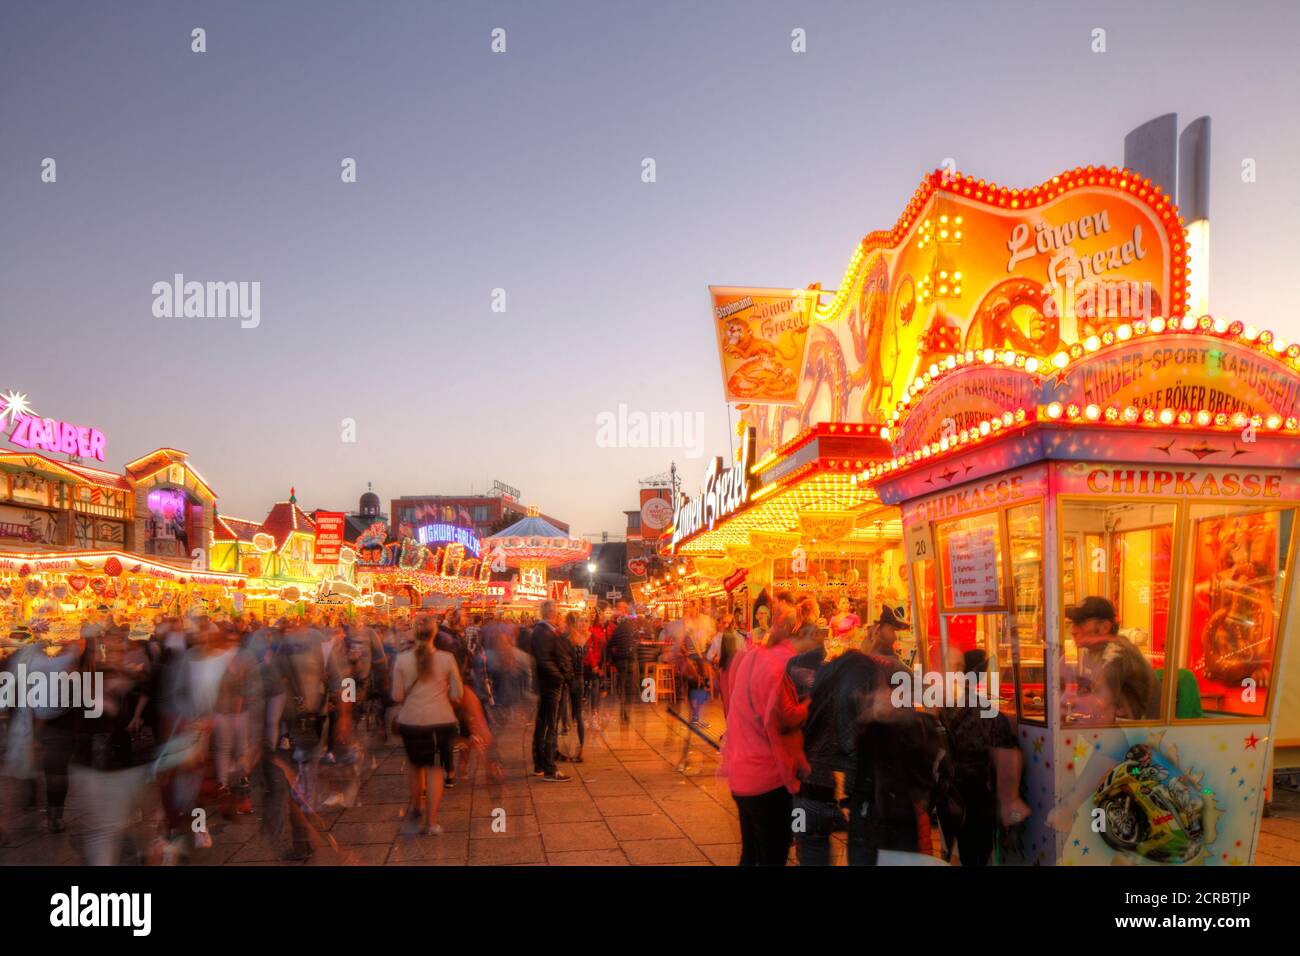 Stalls and fairground rides on the Bremer Freimarkt at dusk, Bremen, Germany, Europe Stock Photo